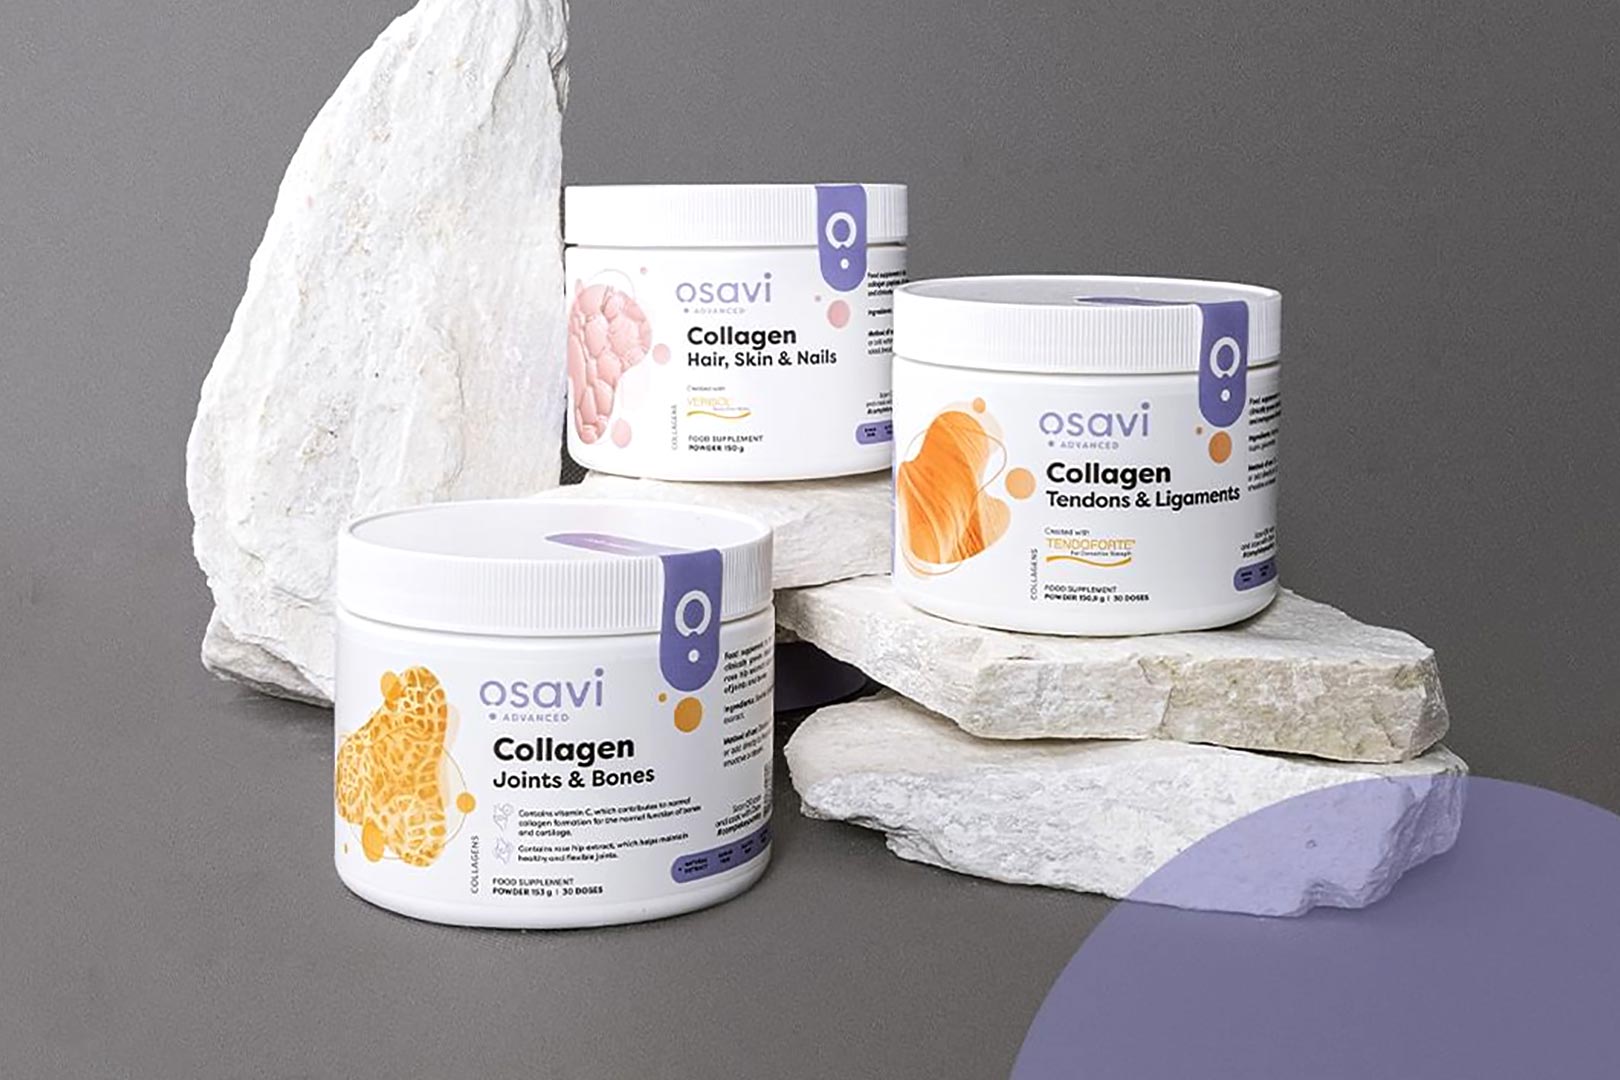 Osavi Advanced Premium Collagen Products